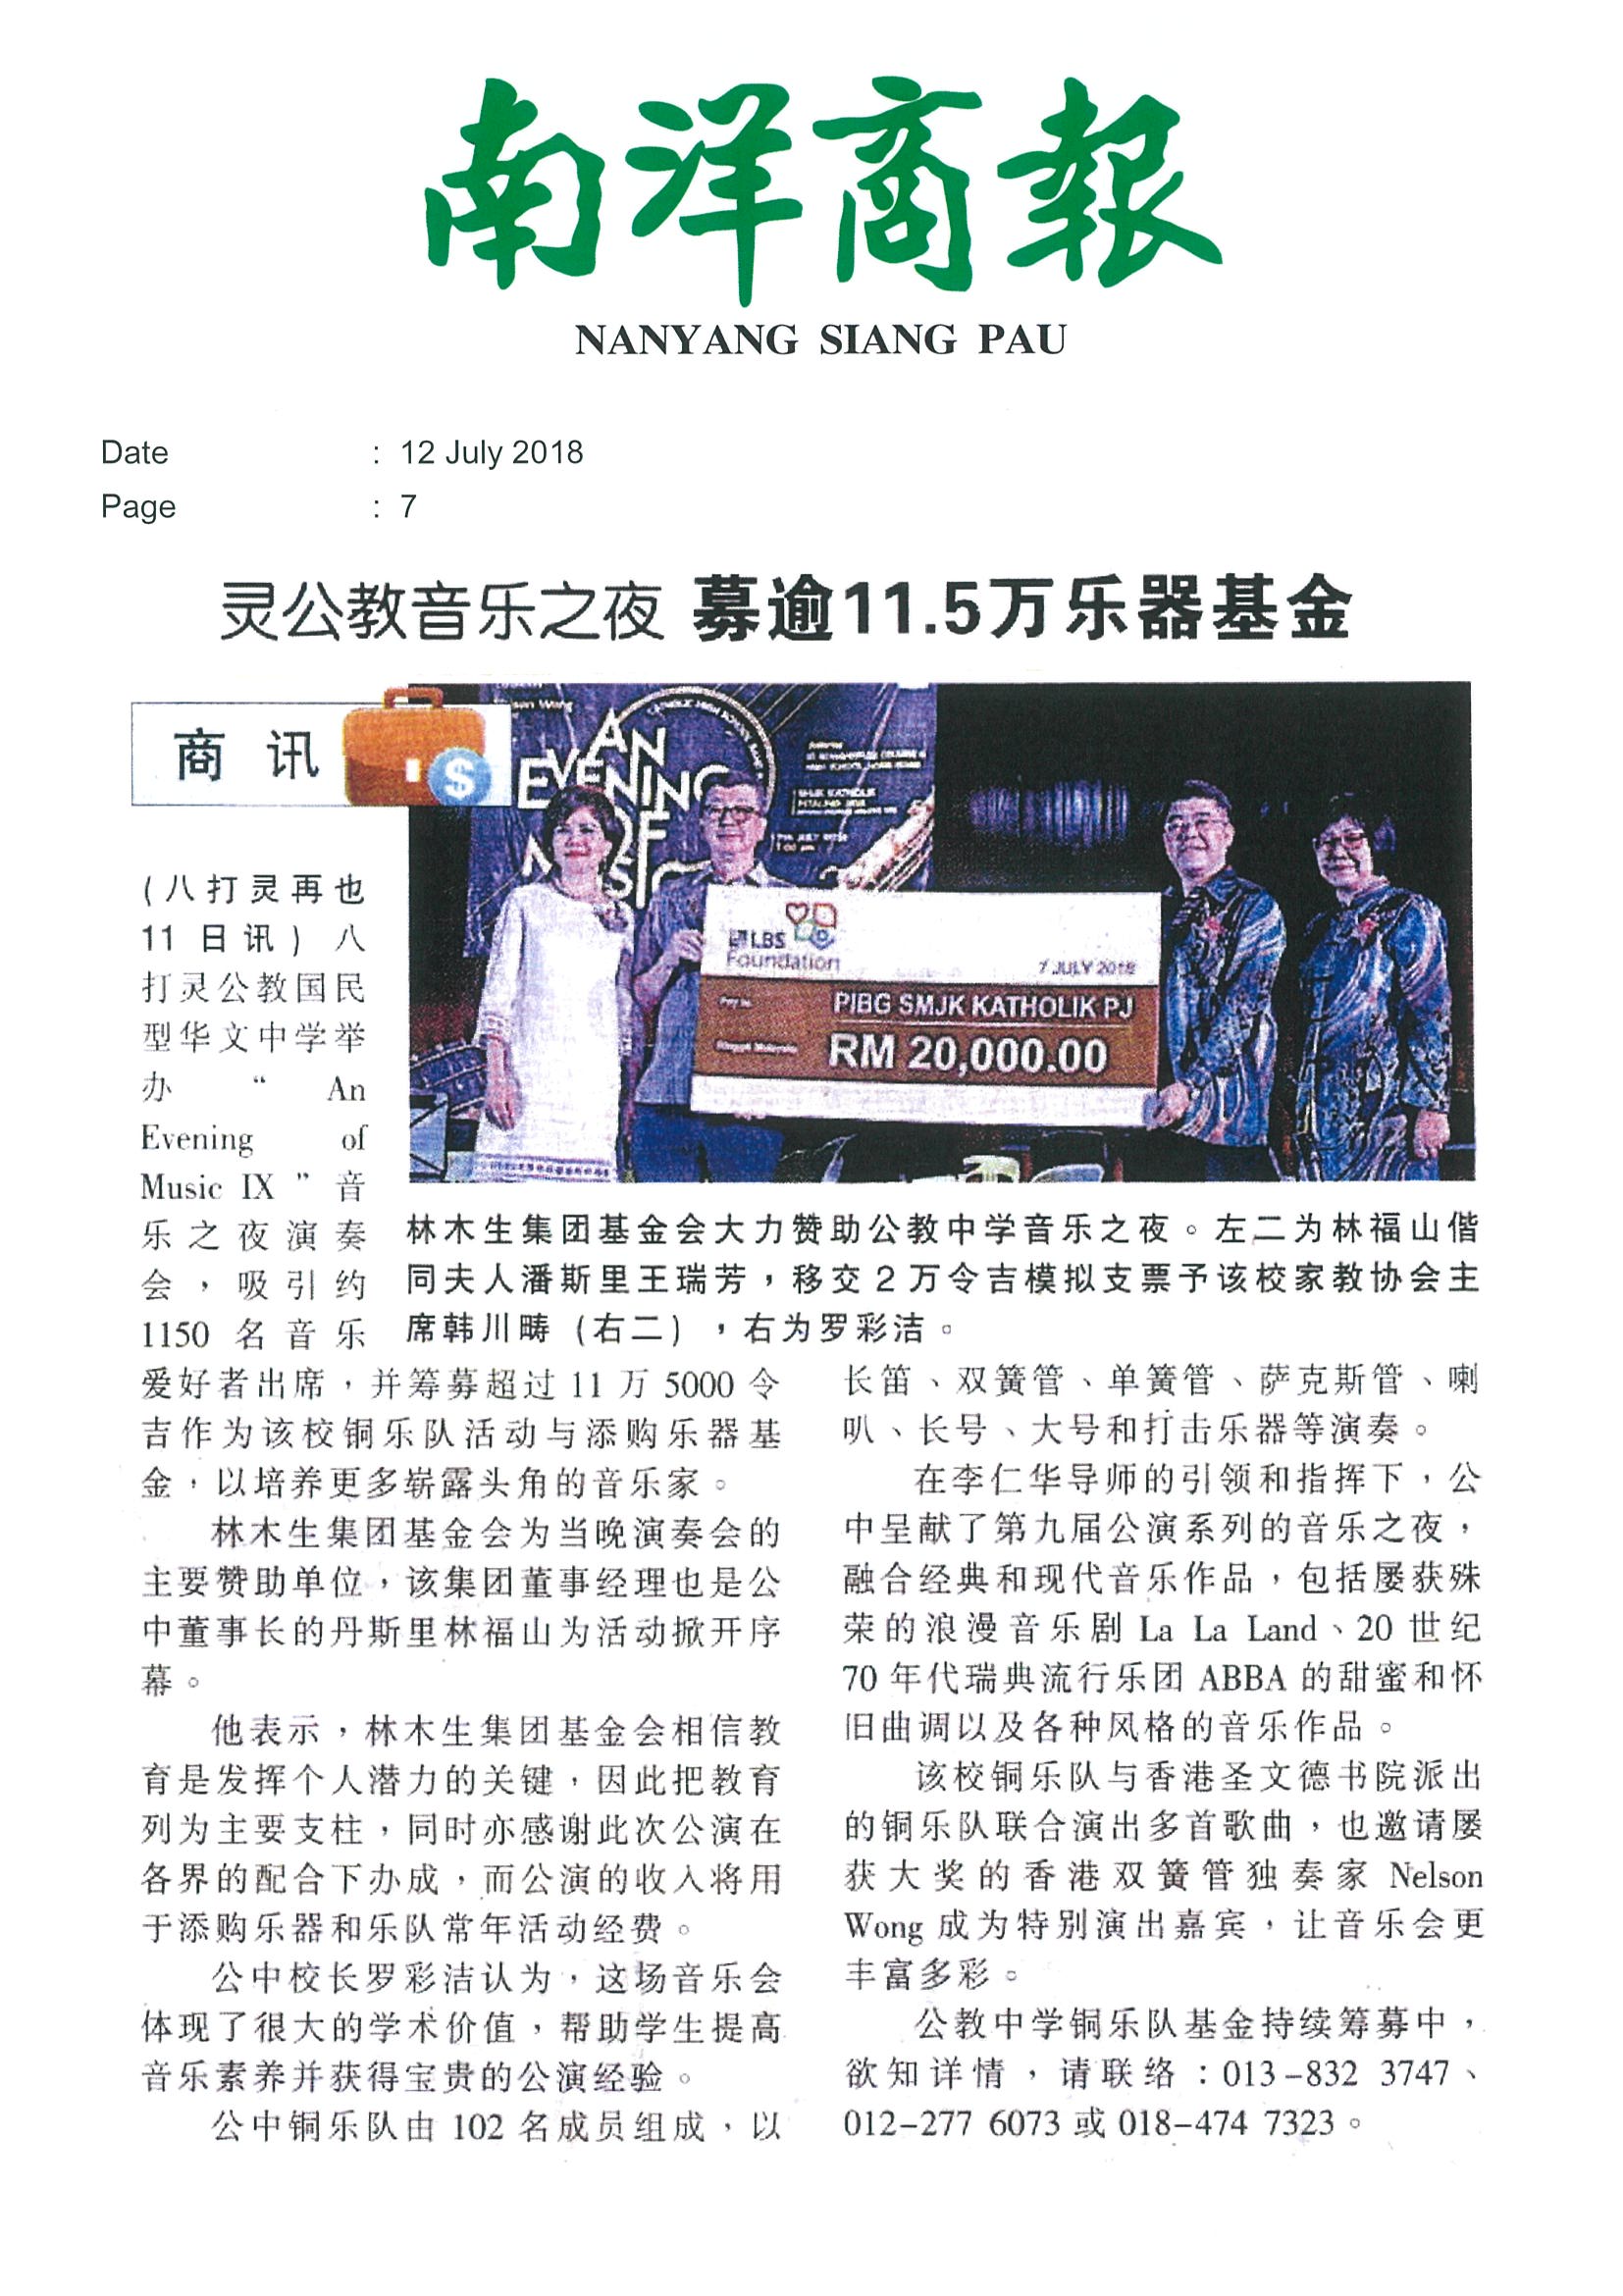 2018.07.12 Nanyang – An Evening of Music IX at Catholic High School (PJ) successfully raises RM 11.5 thousand